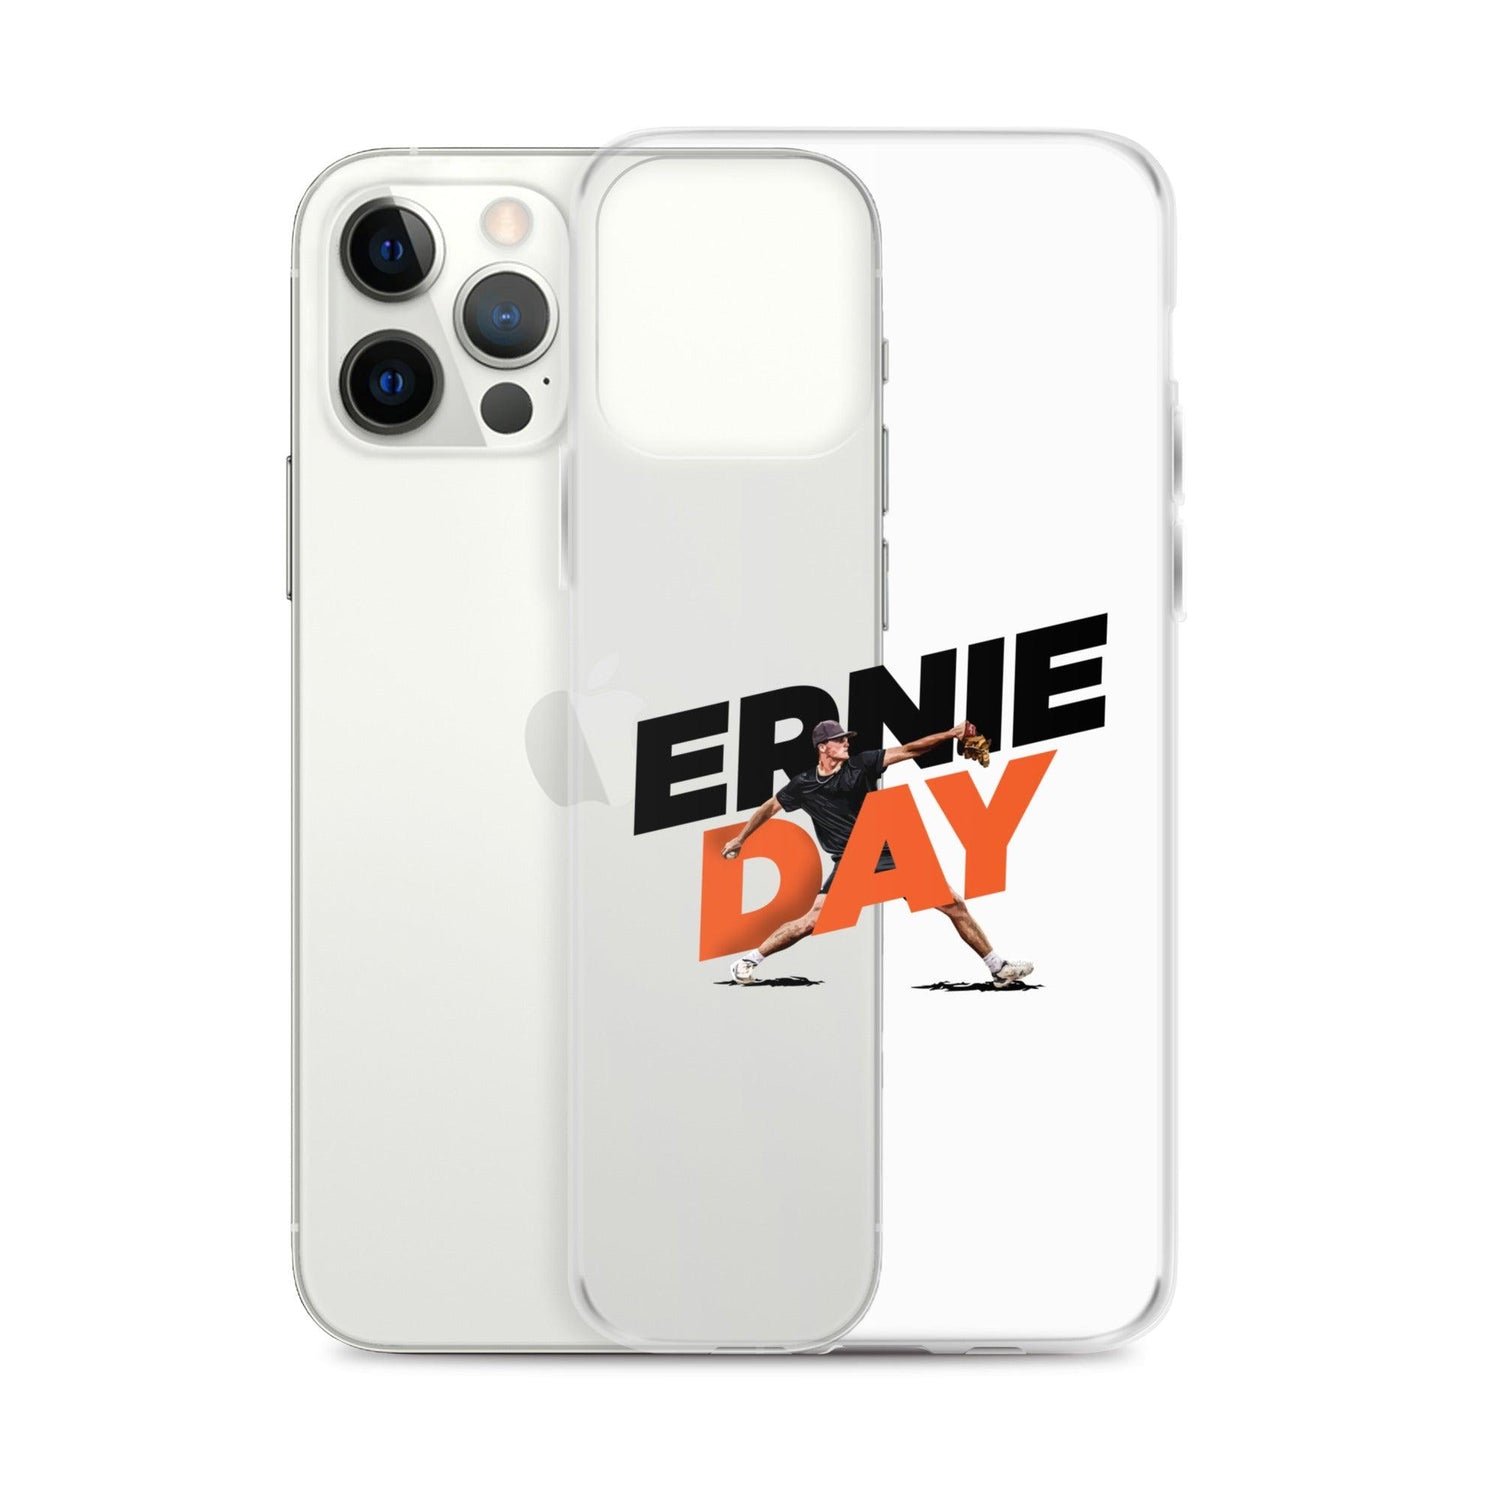 Ernie Day "Gameday" iPhone Case - Fan Arch